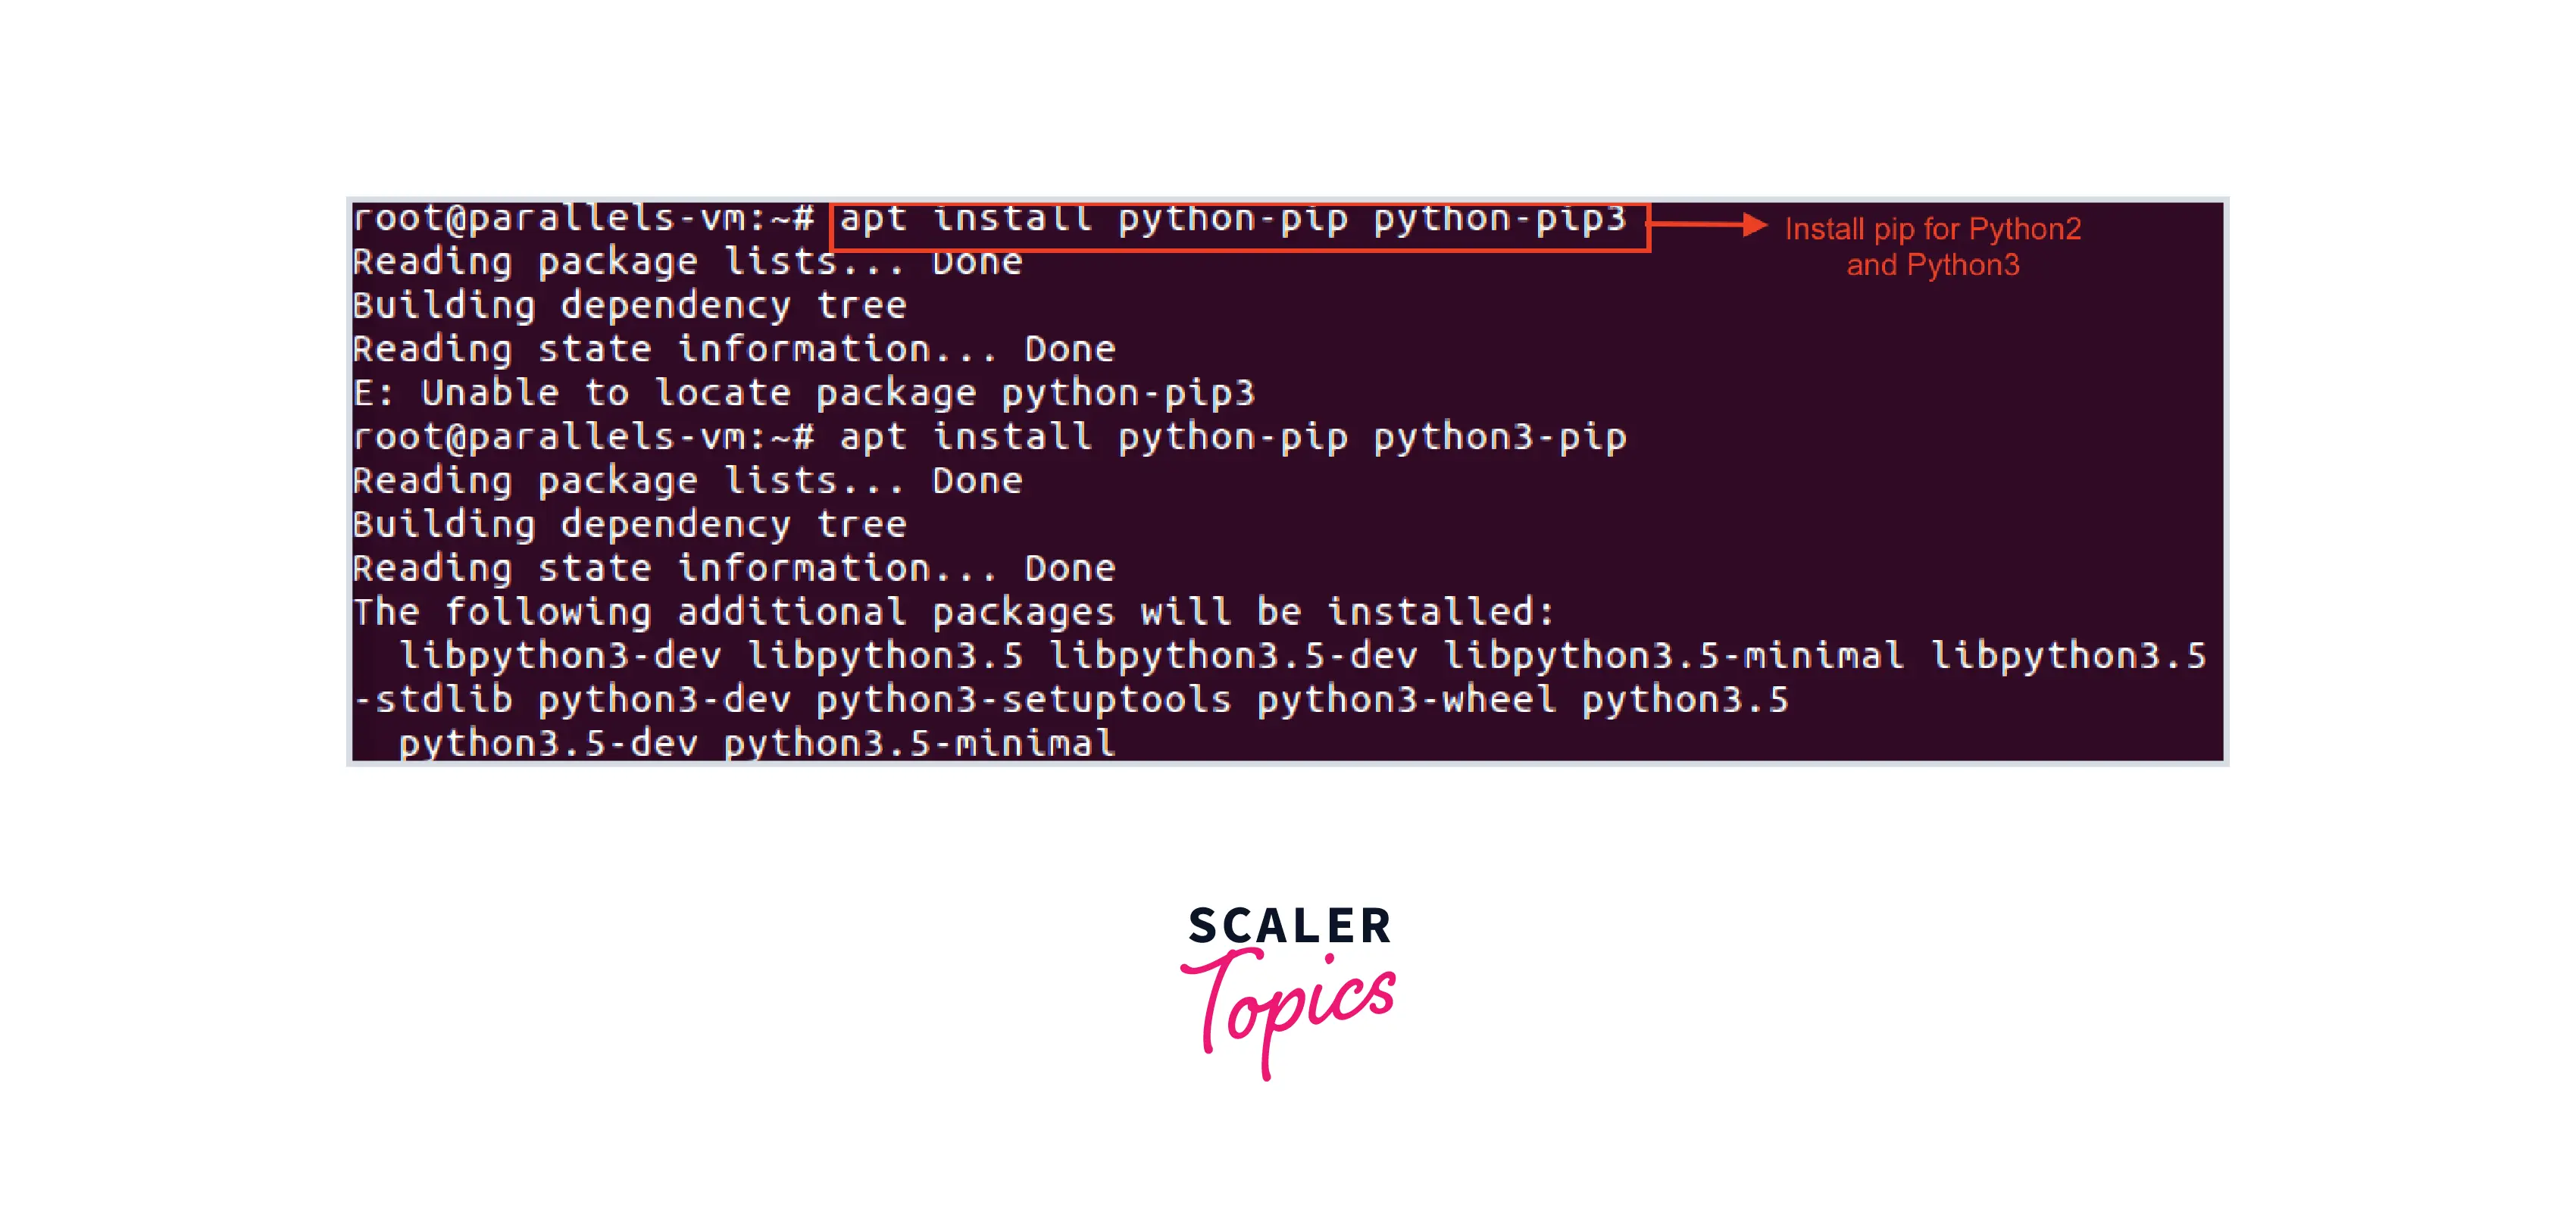 Installing pip on Ubuntu Linux